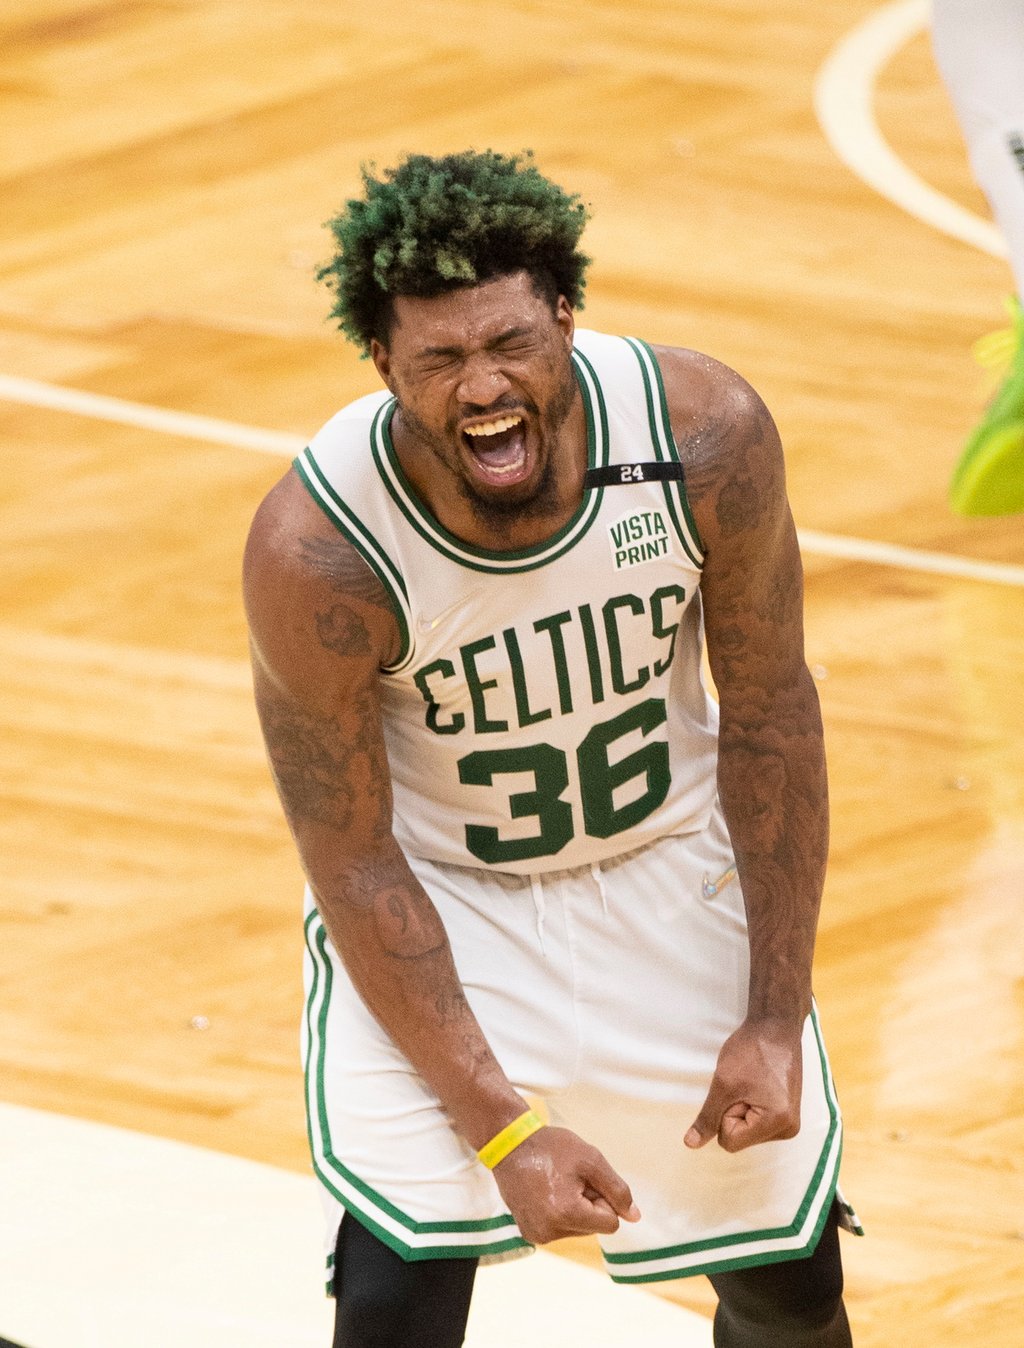 Heat vs Celtics, duelo de titanes